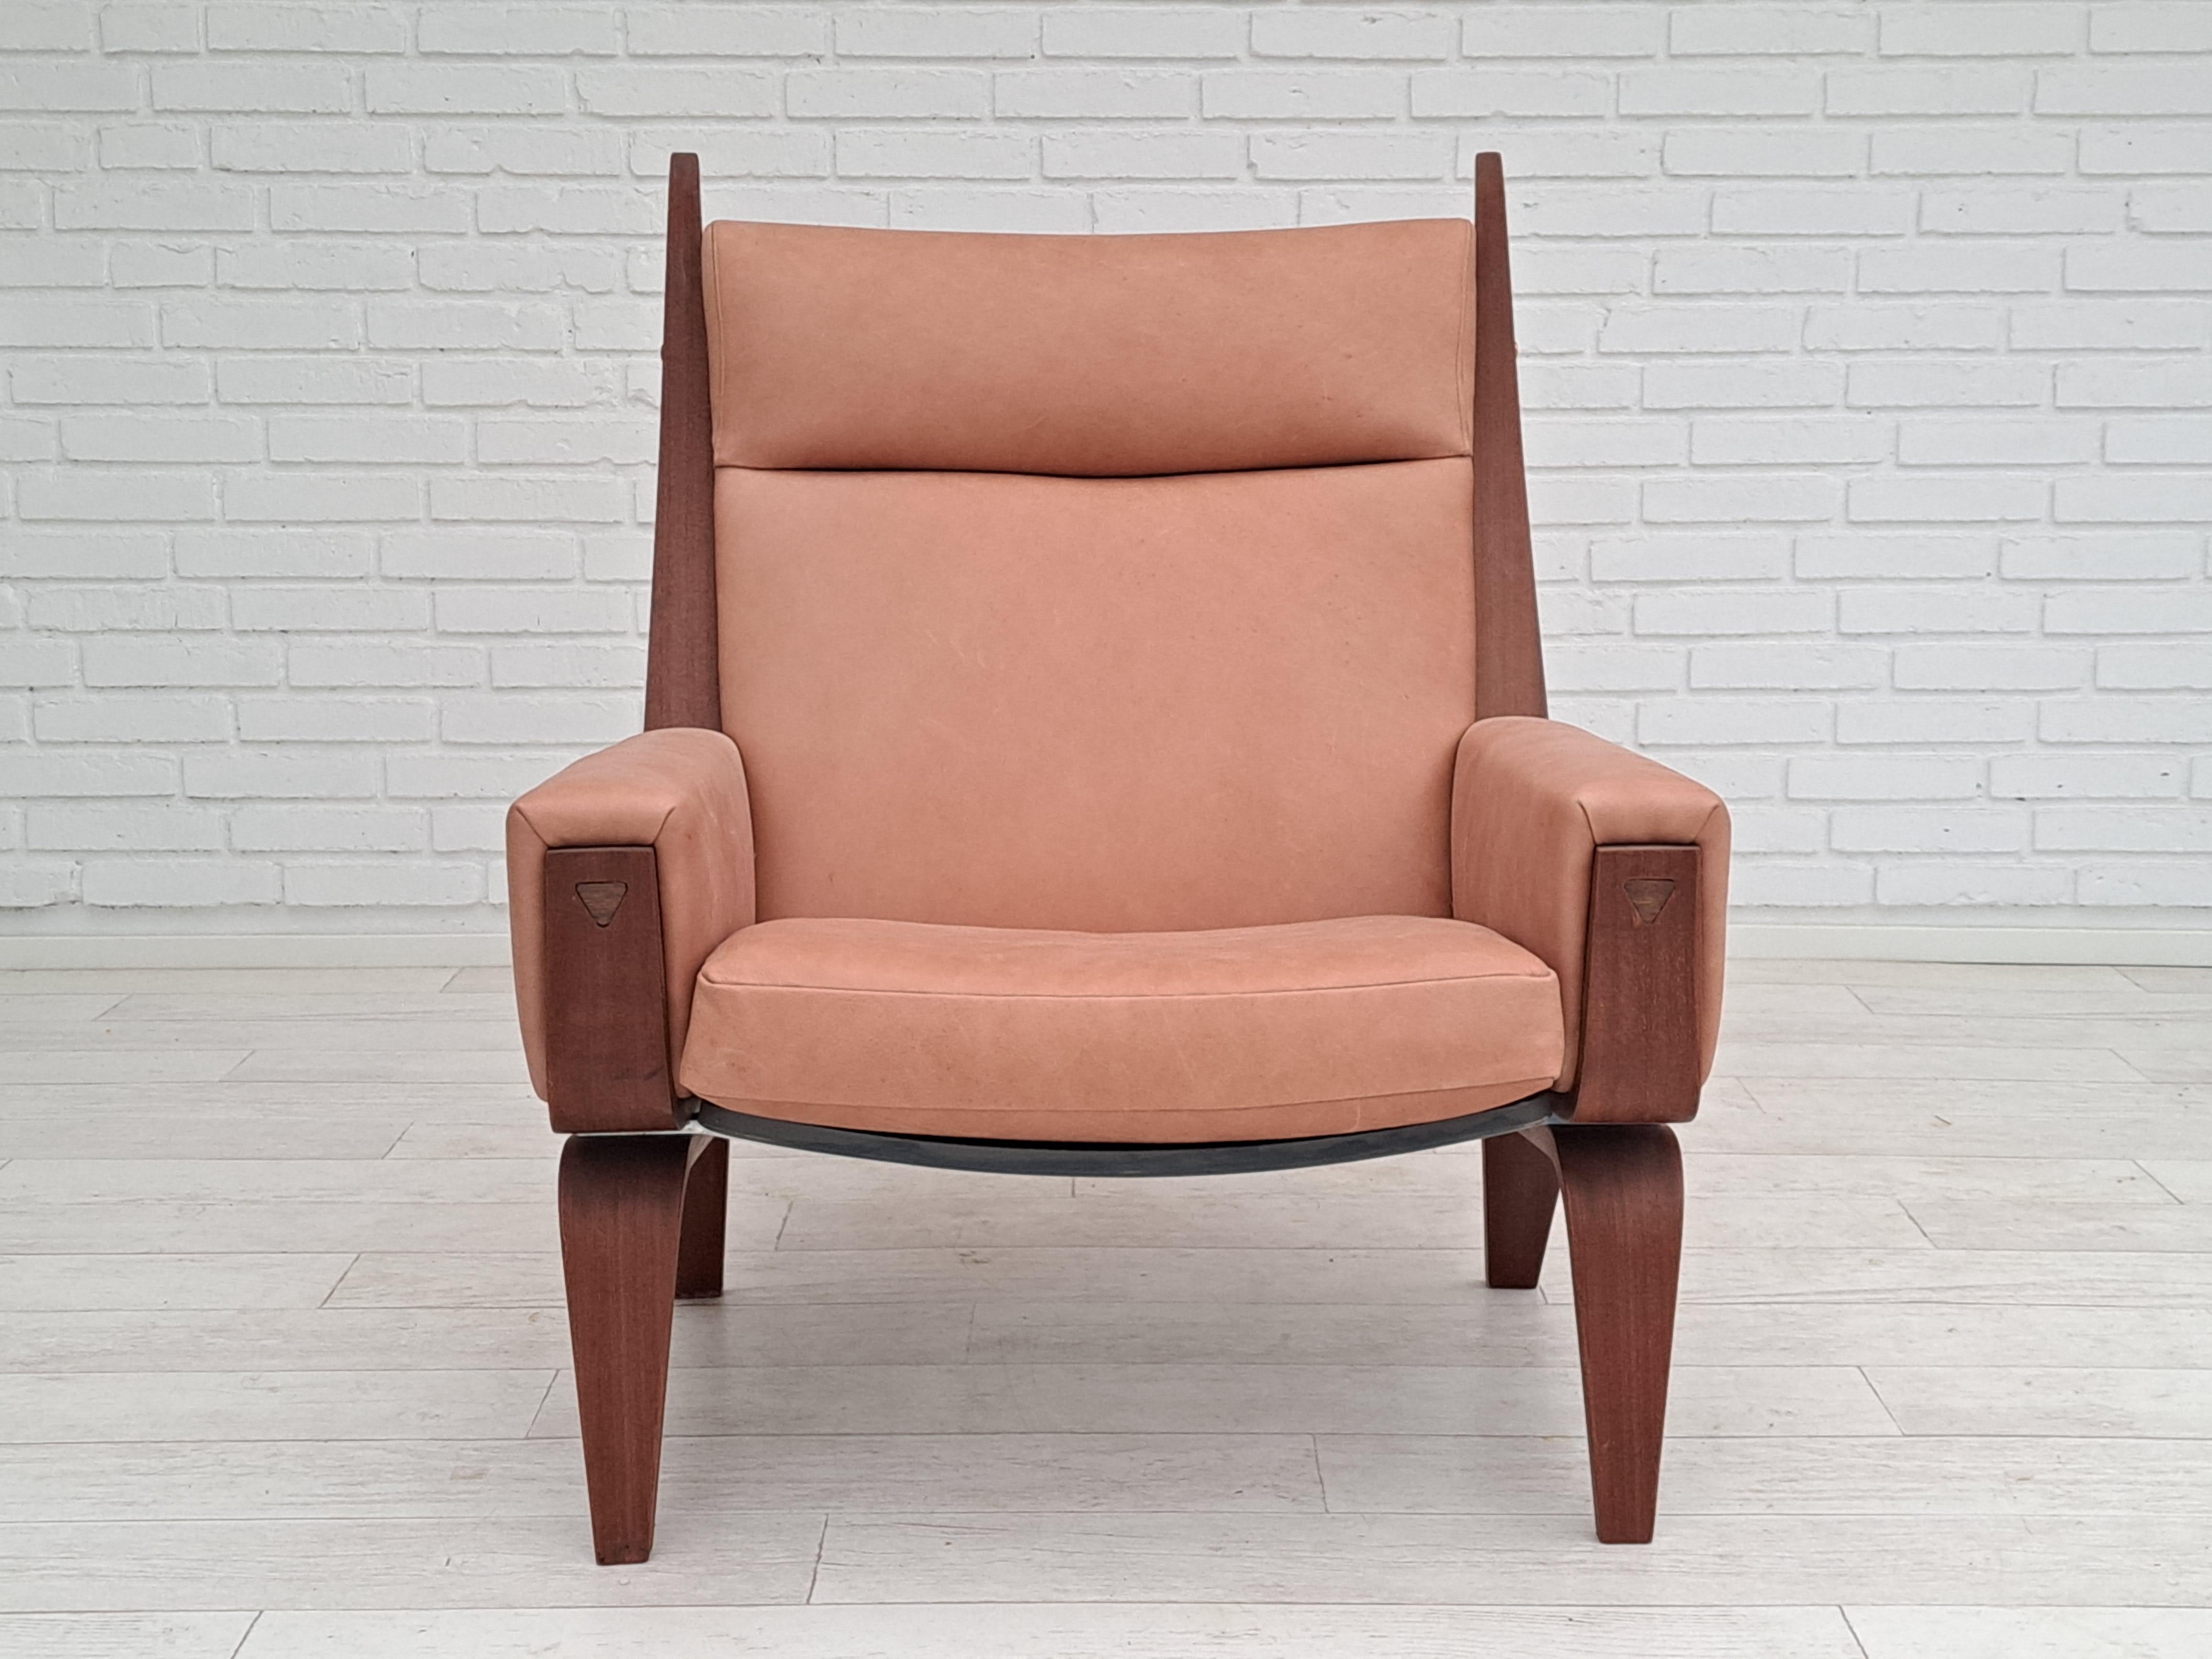 Late 20th Century Danish Design by H.J.Wegner, GE501A, 70s, Teak Wood, Leather